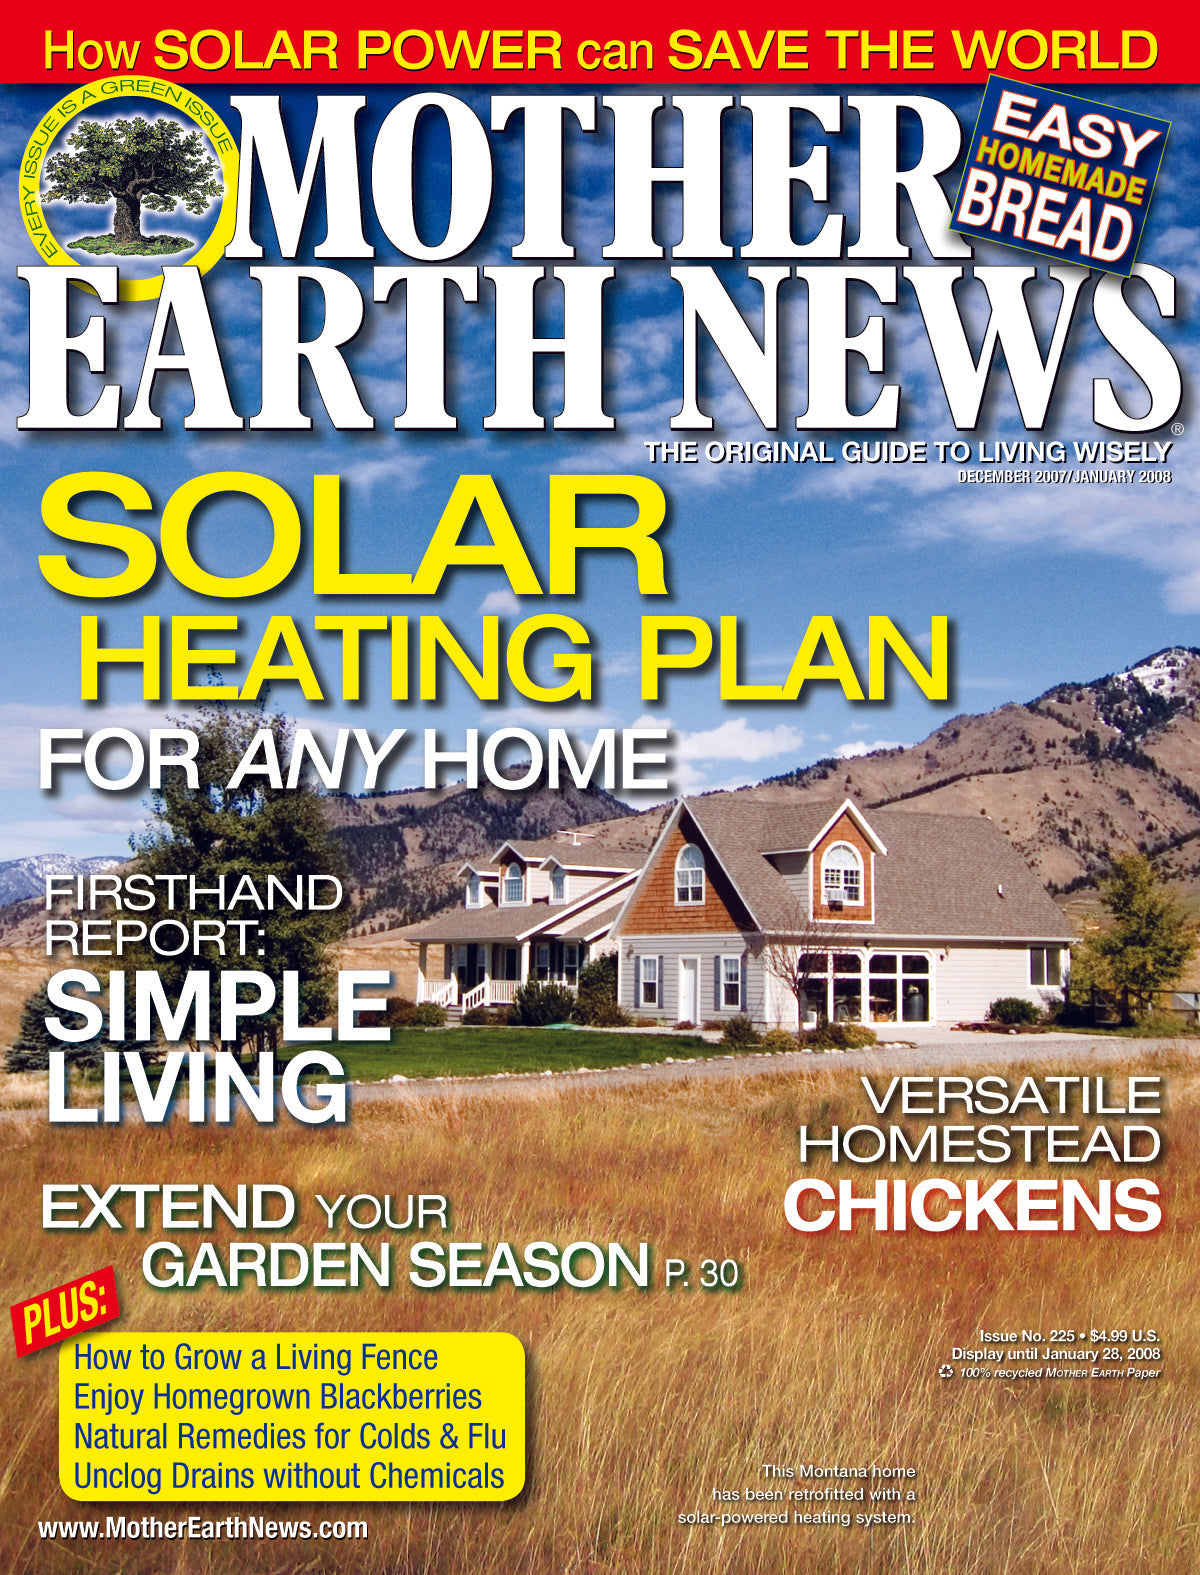 MOTHER EARTH NEWS MAGAZINE, DECEMBER 2007/JANUARY 2008 #225